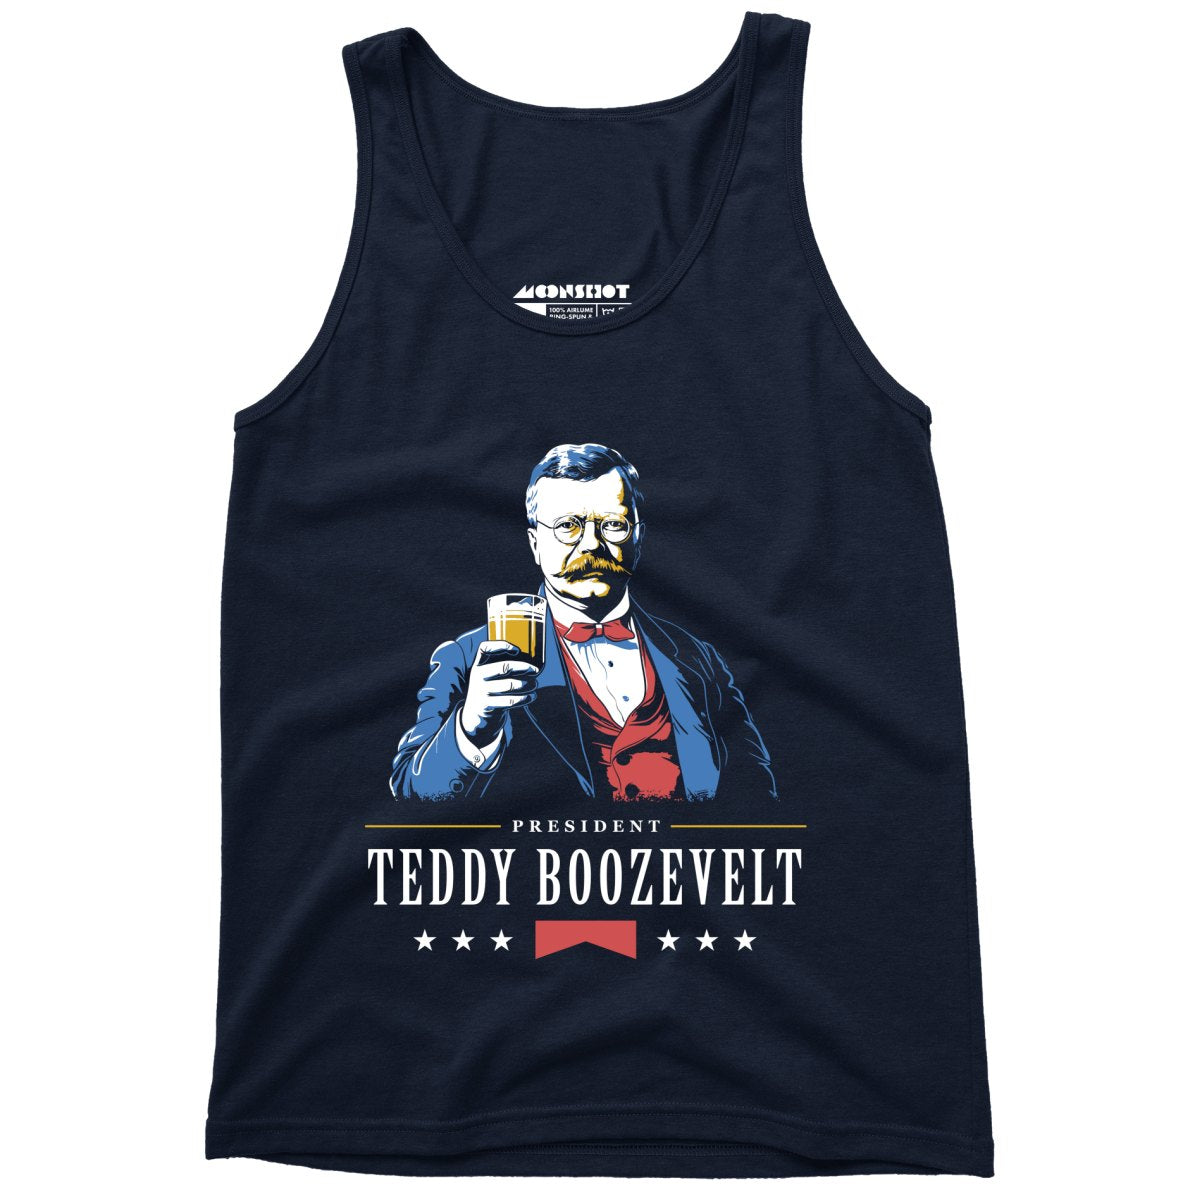 President Teddy Boozevelt - Unisex Tank Top